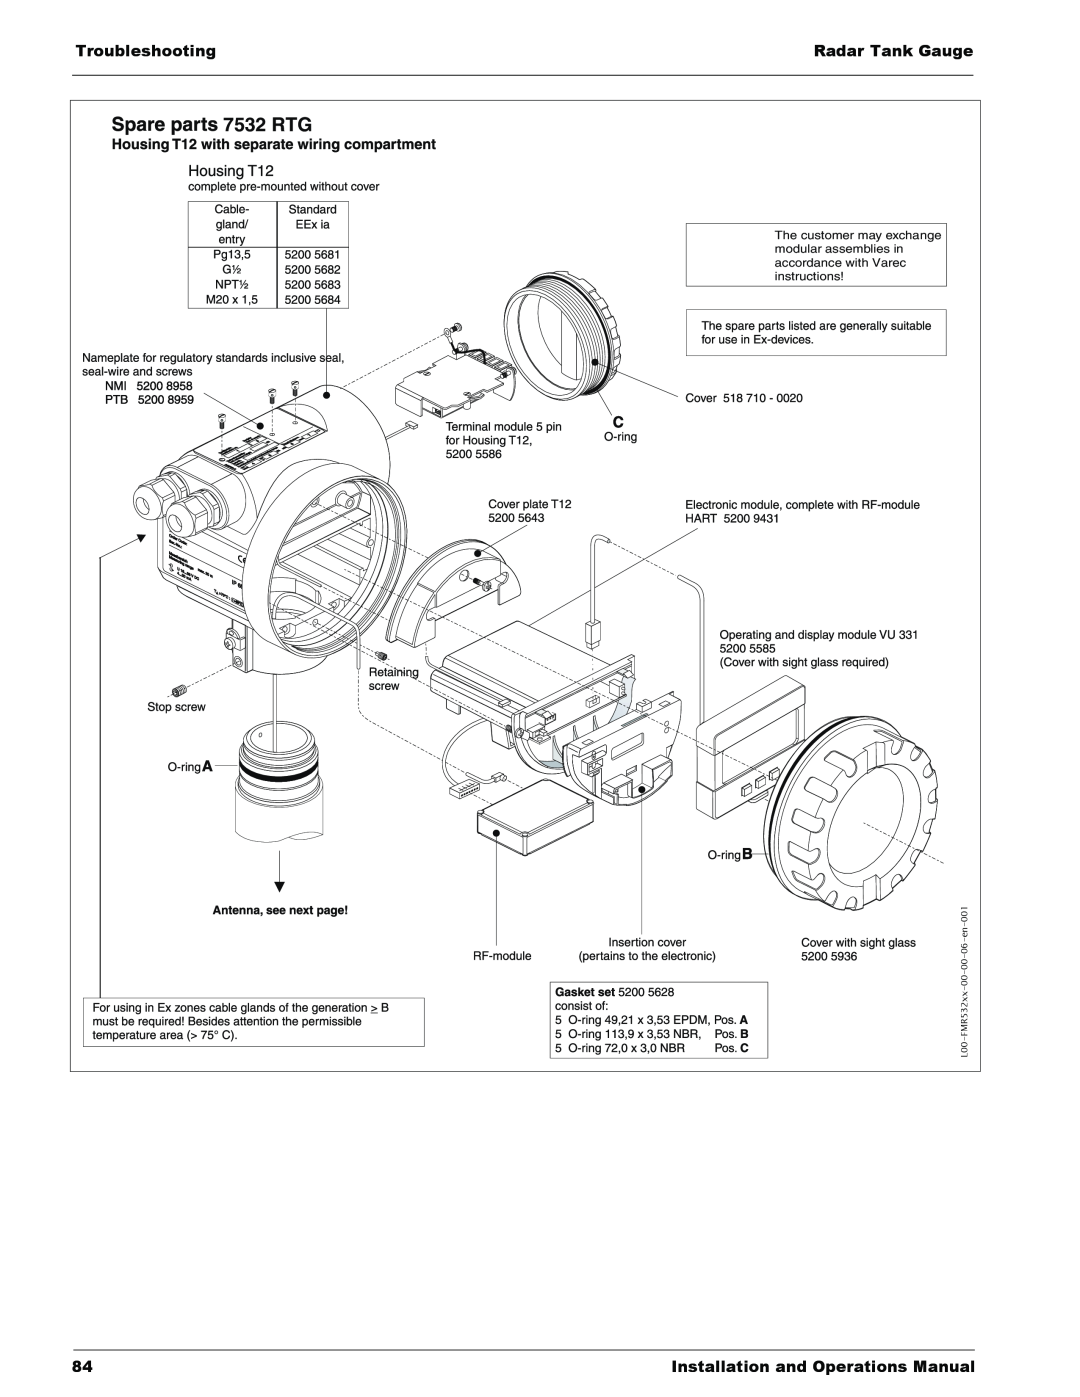 Lightning Audio manual 7532 RTG, Troubleshooting, Radar Tank Gauge, Installation and Operations Manual, 00-00, FMR532xx 